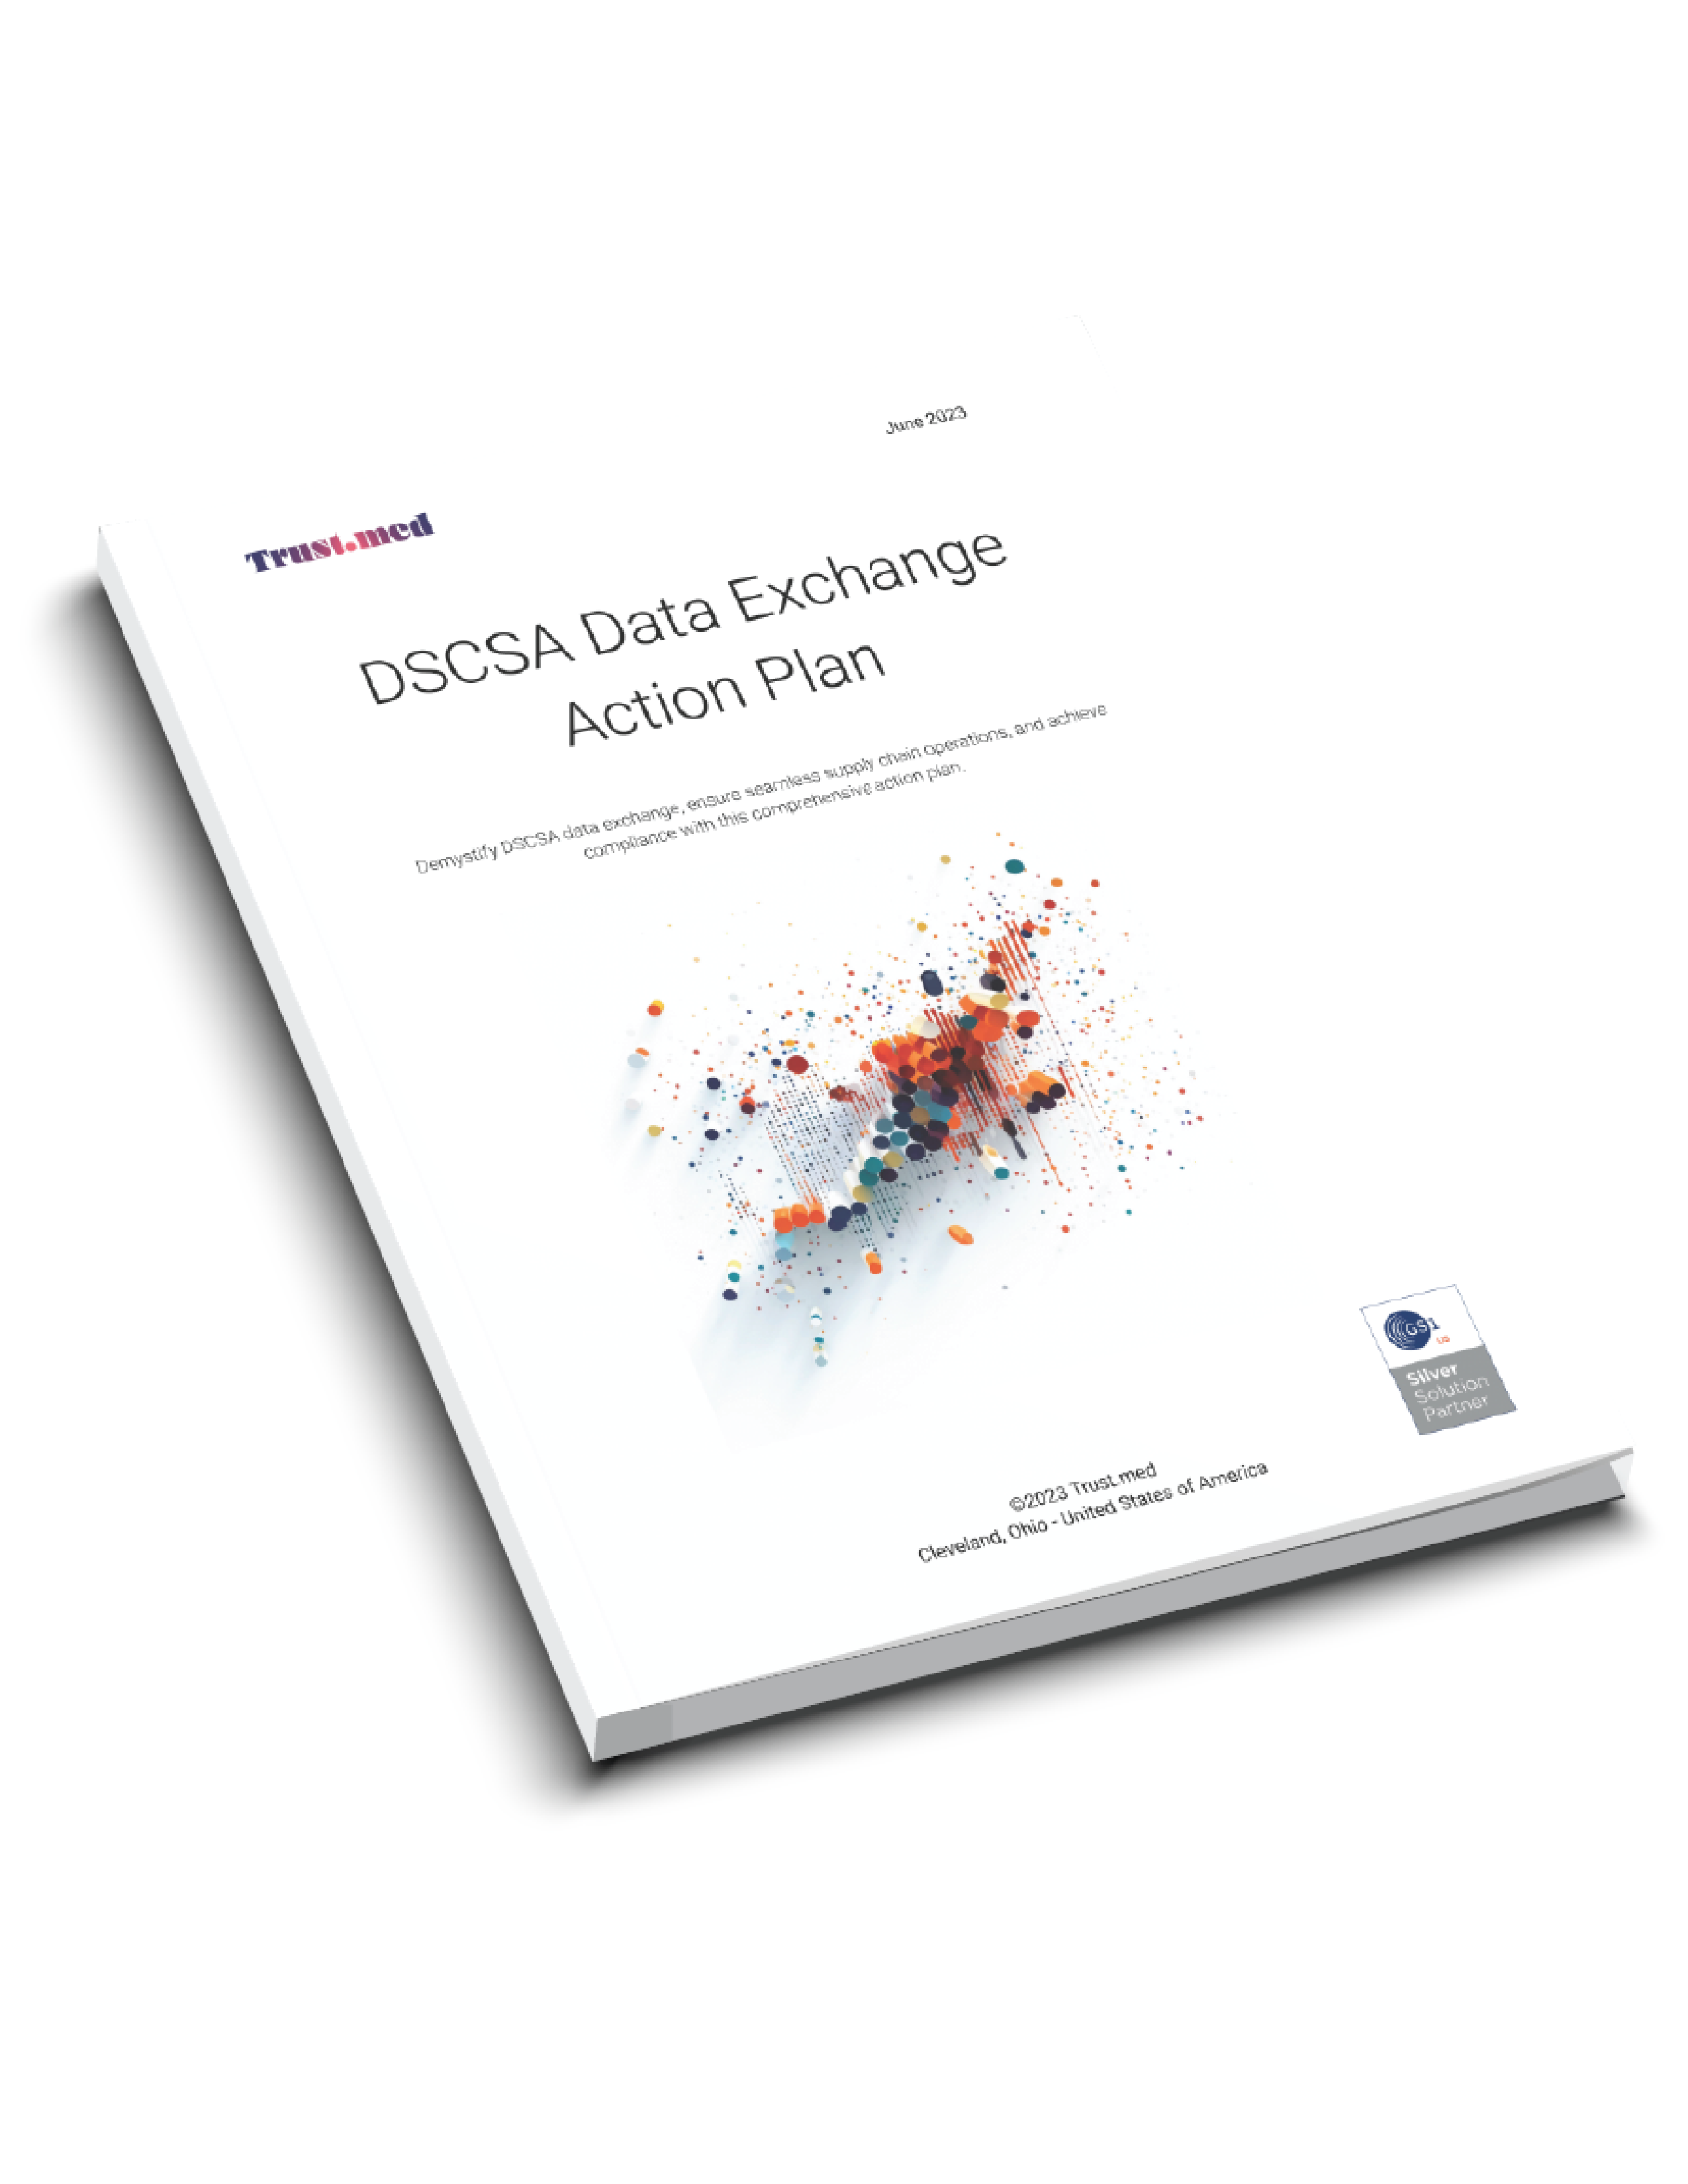 Image of DSCSA Data Exchange Action Plan